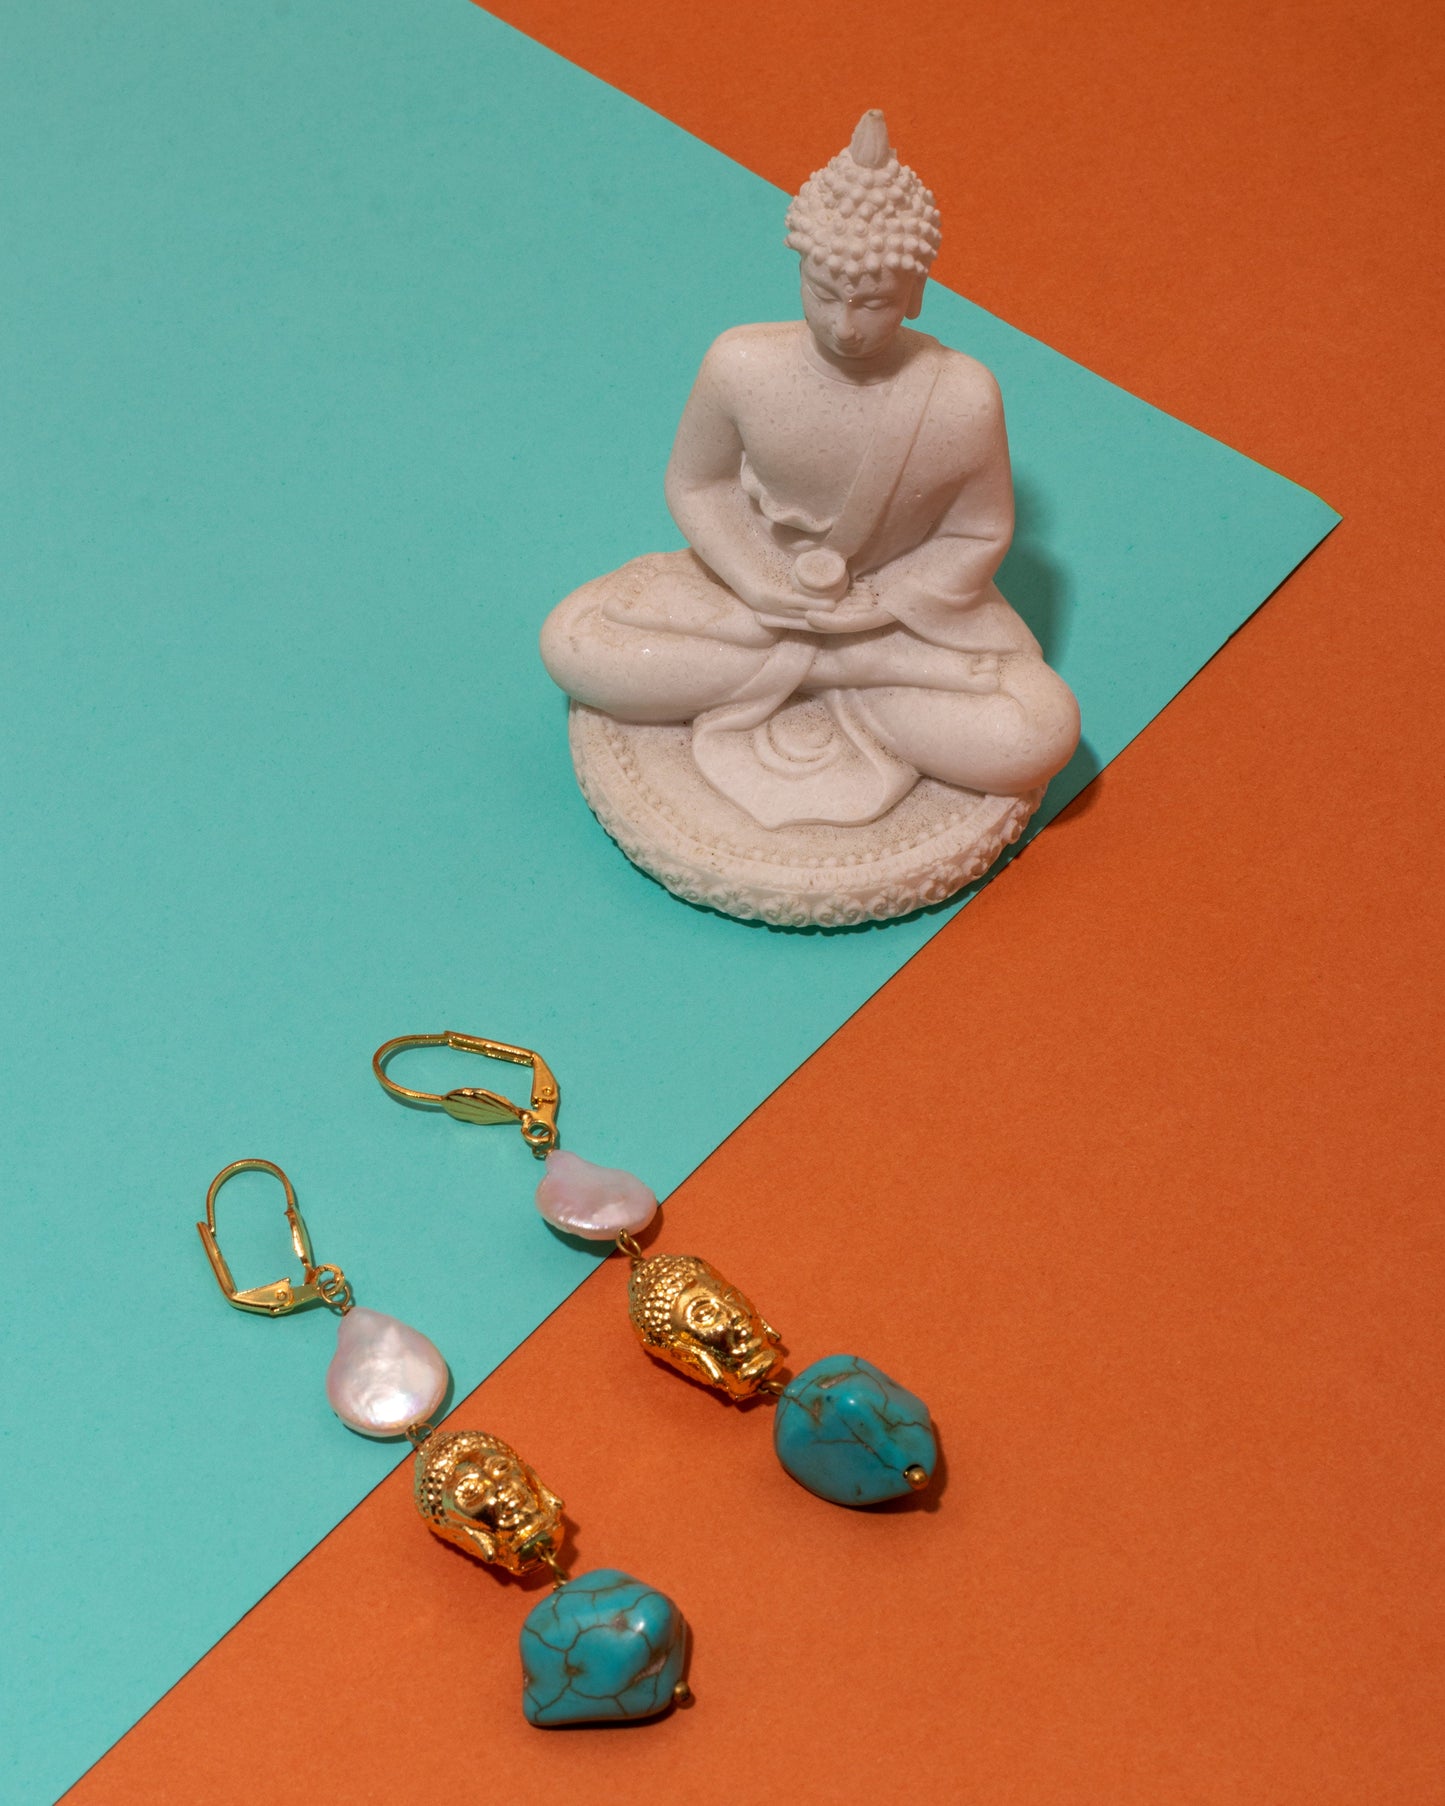 Moonstruck Pearl and Turqoise Buddha Earrings for Women - www.MoonstruckINC.com